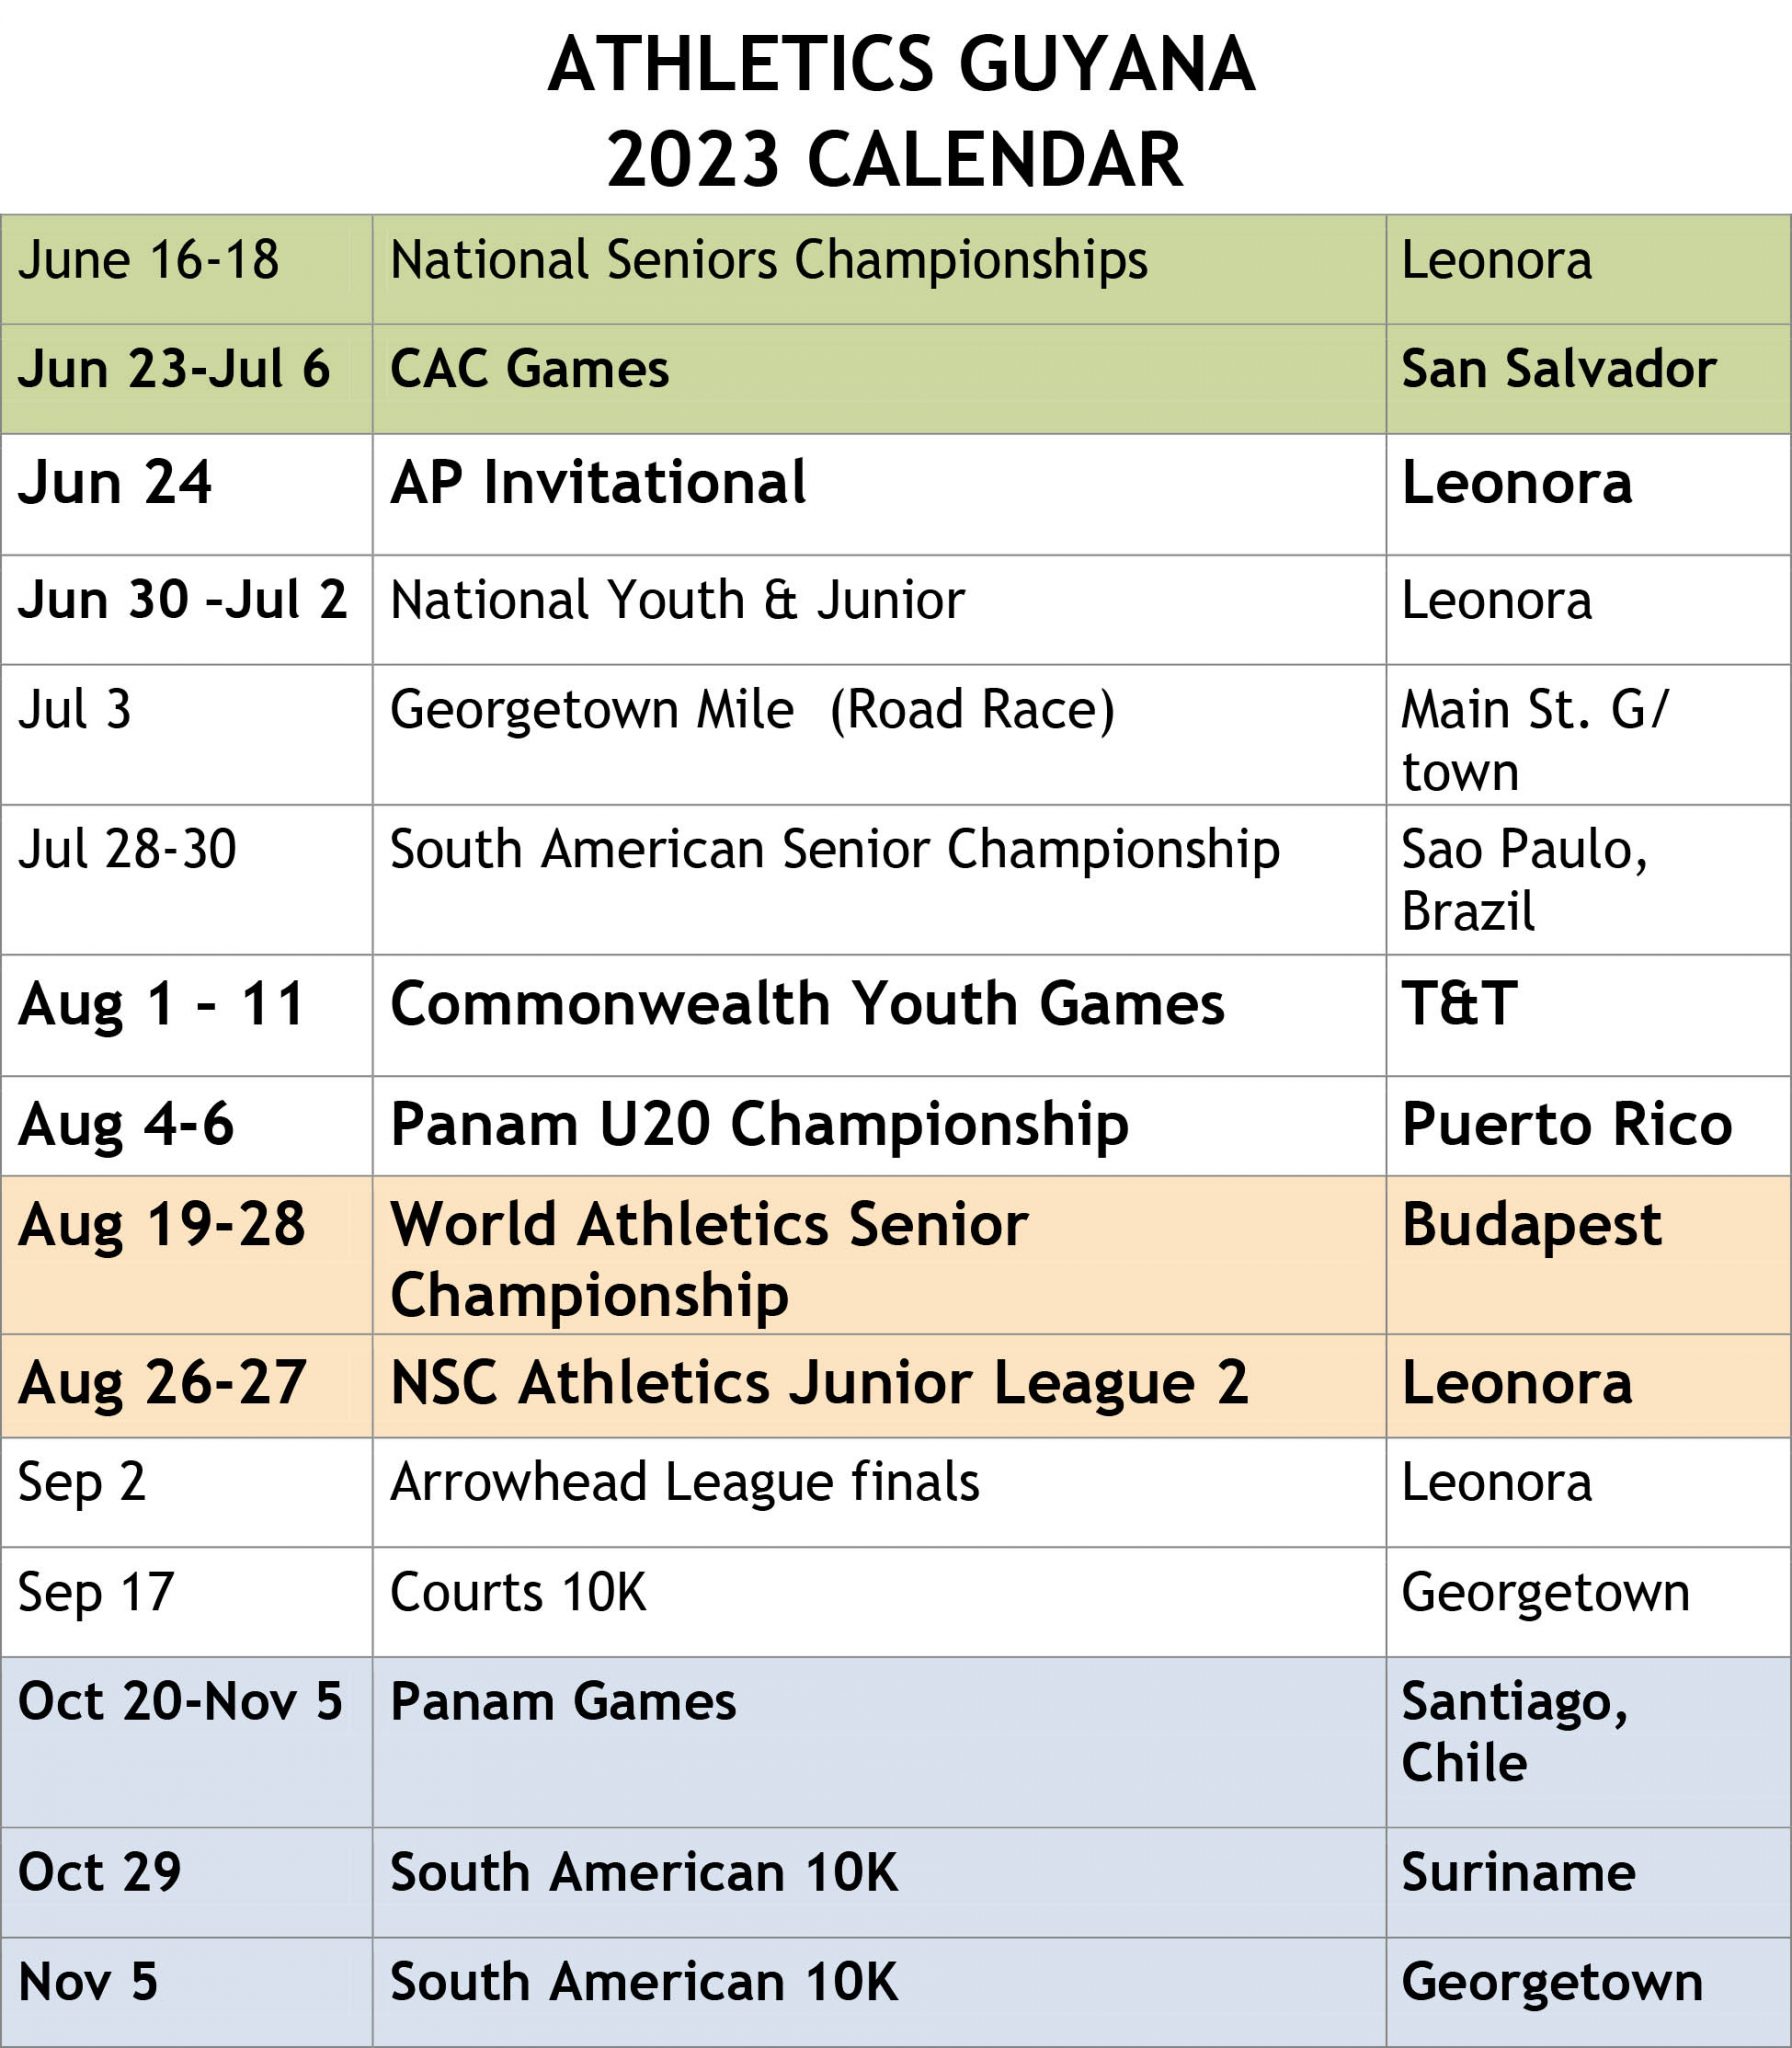 AAG unveils calendar schedule for 2023 Stabroek News